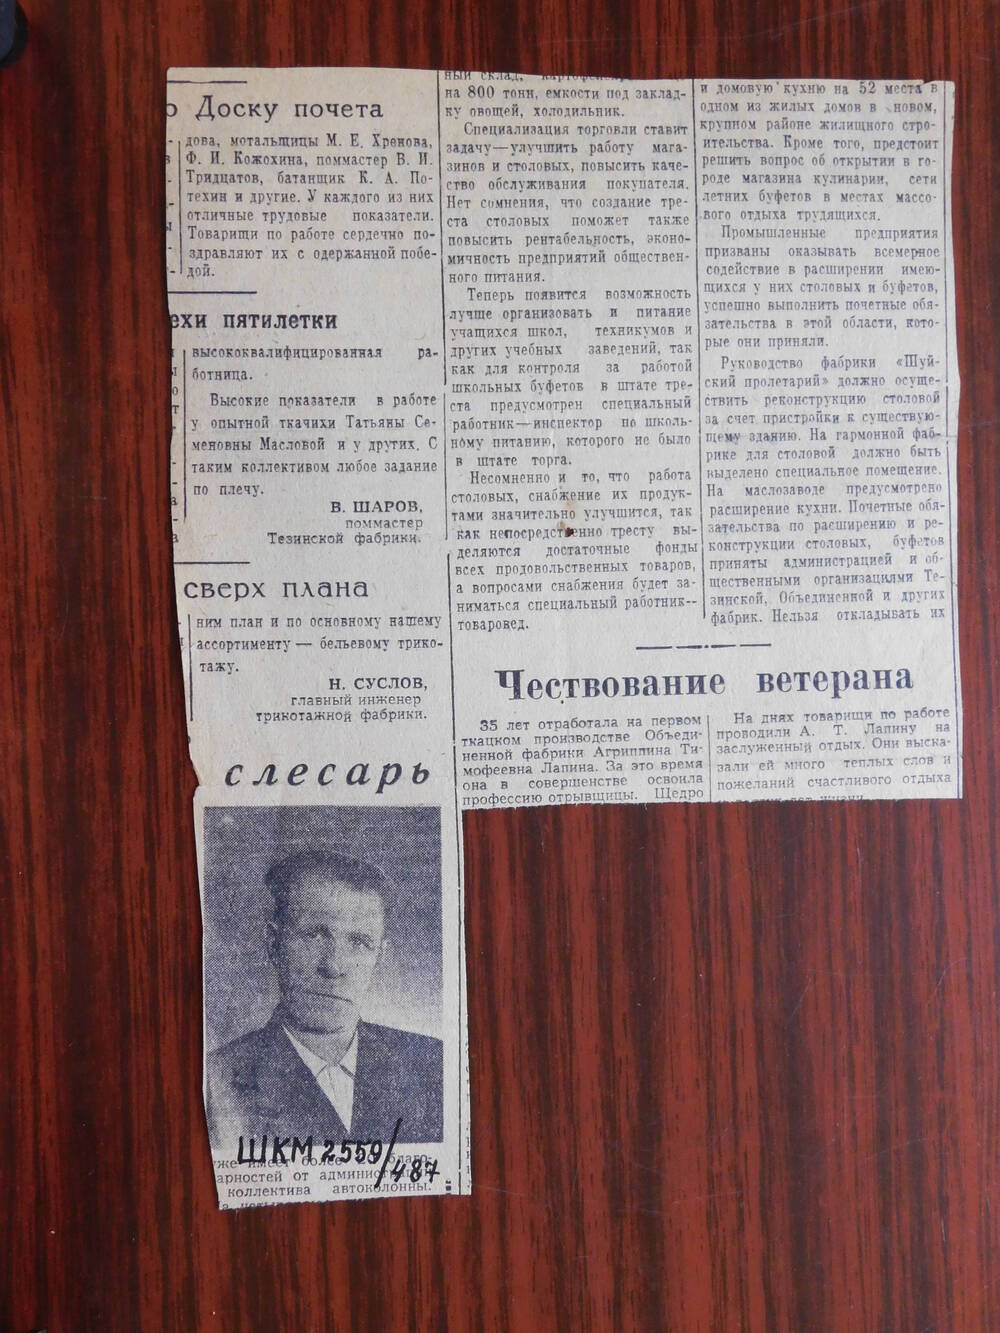 Фрагмент газеты Знамя коммунизма № 99 от 25.06.1966 г. Ст. А. Сироткин. Шуя 1771 г. Шуя.